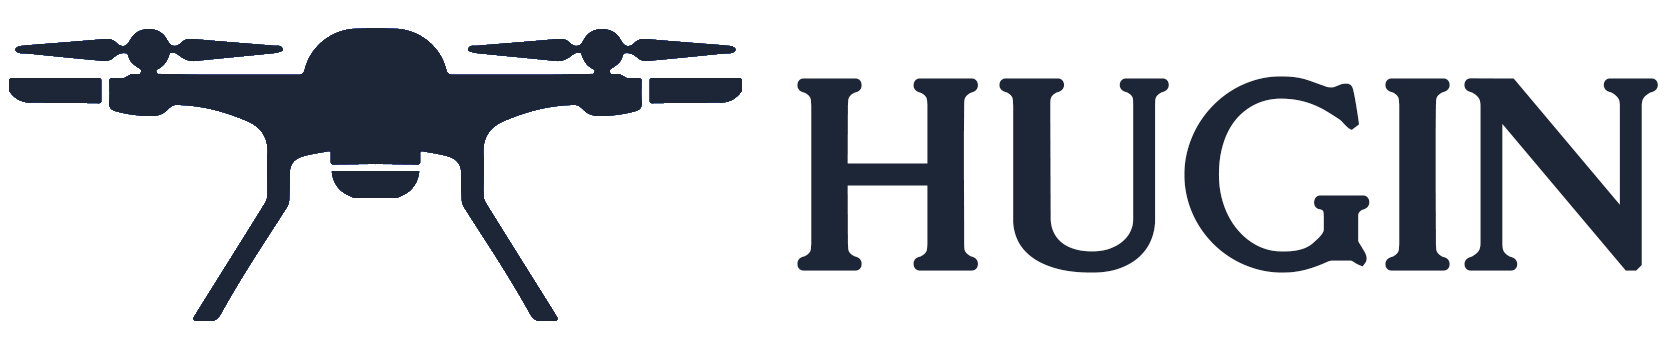 Vår logo: En drone med teksten Hugin vedsiden